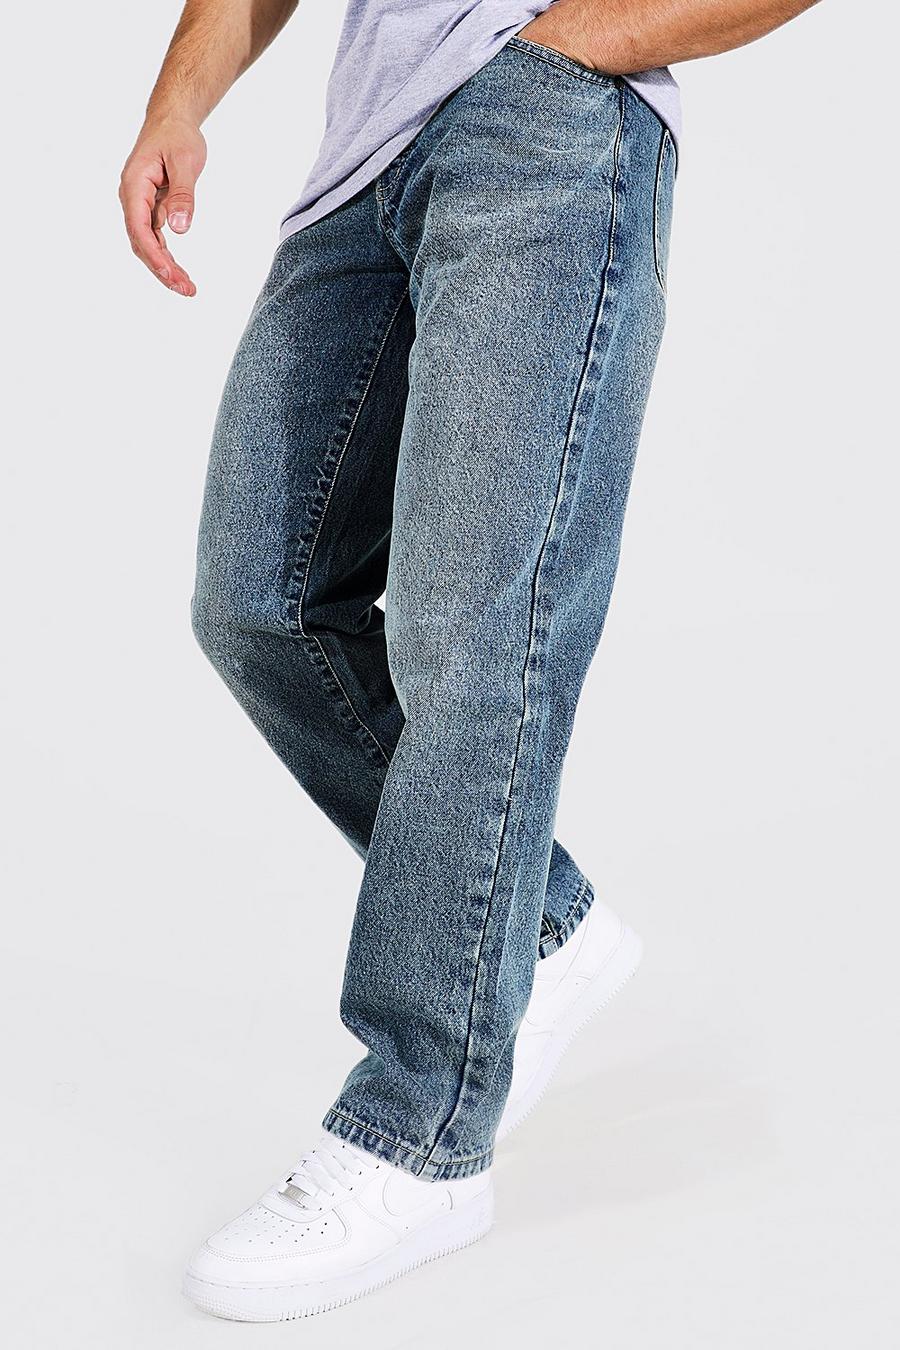 Lockere Jeans Baumwolle, Antique blue image number 1